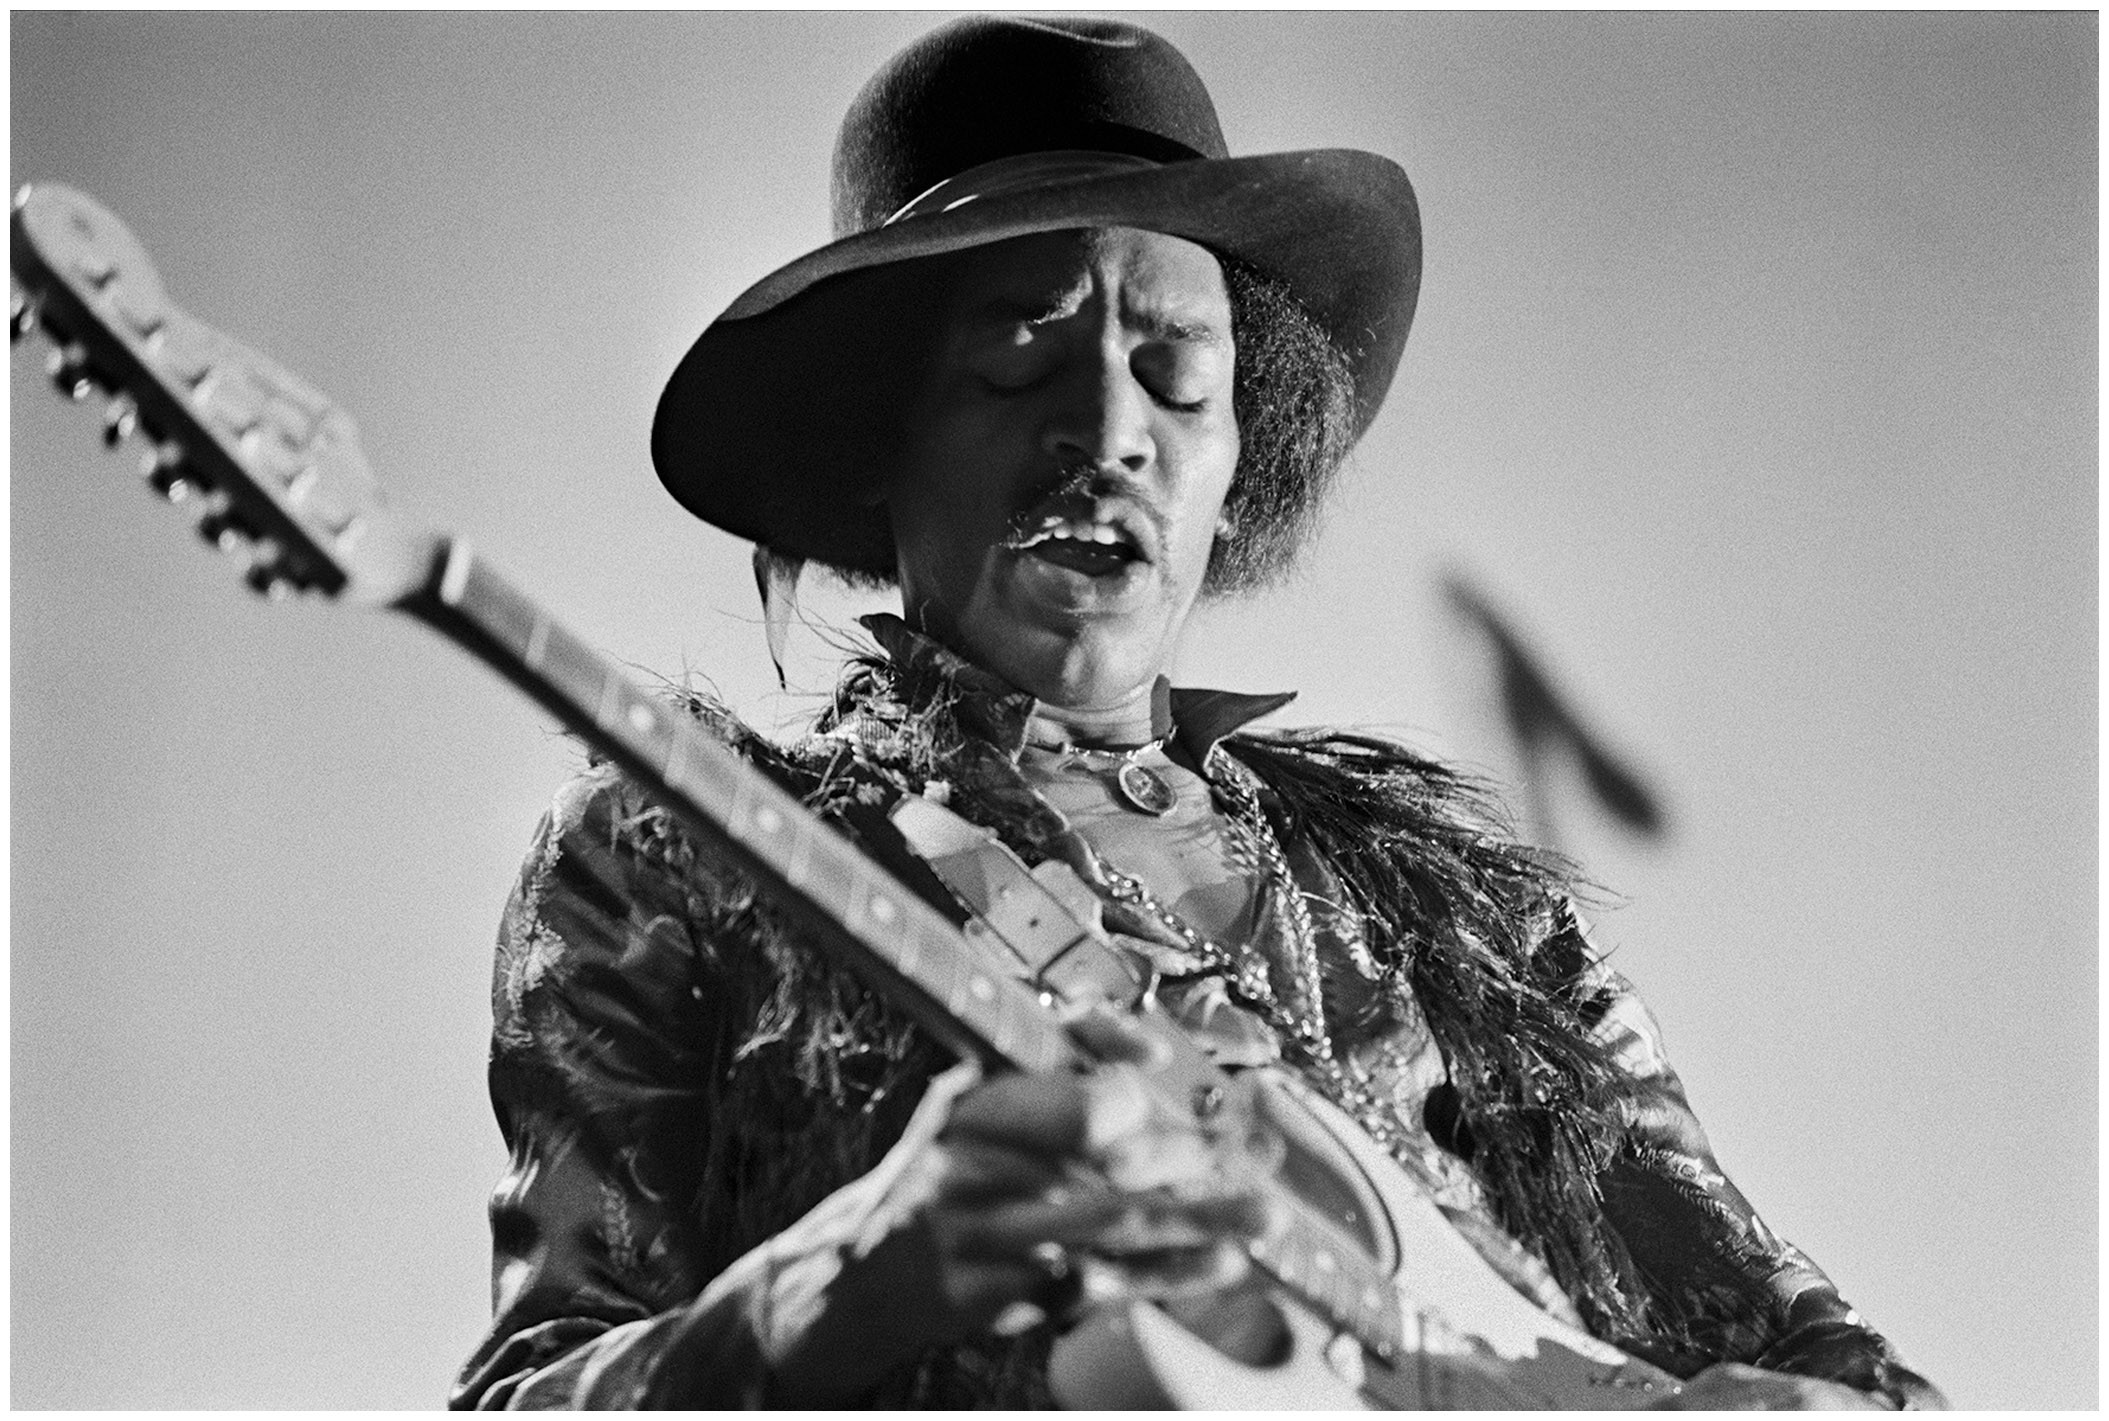 People 2109x1421 men musician Jimi Hendrix monochrome guitarist simple background guitar playing hat music